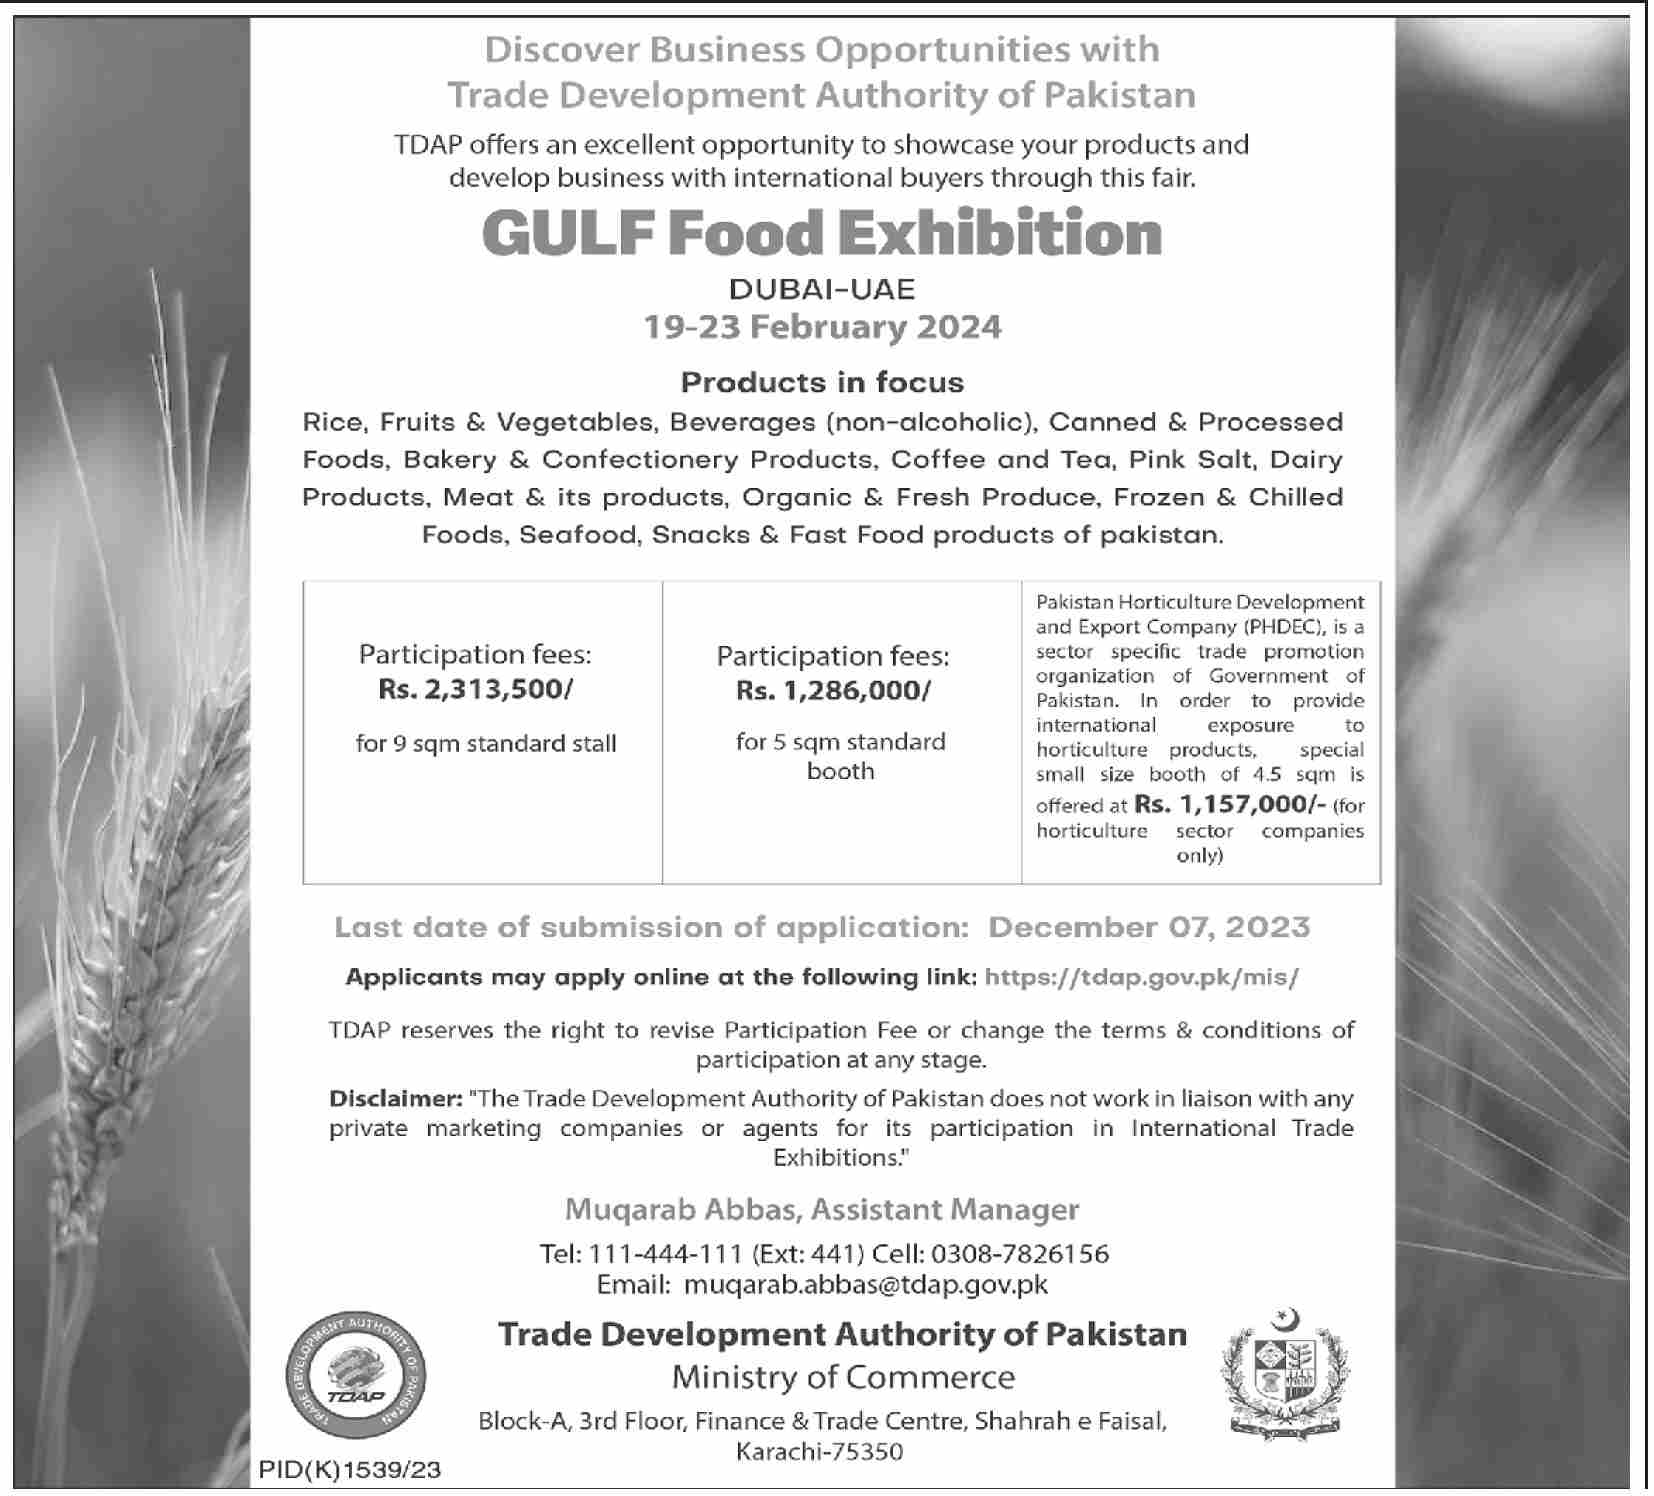 Gulf Food Exhibition Dubai UAE 2024 Trade Development Authority of Pakistan